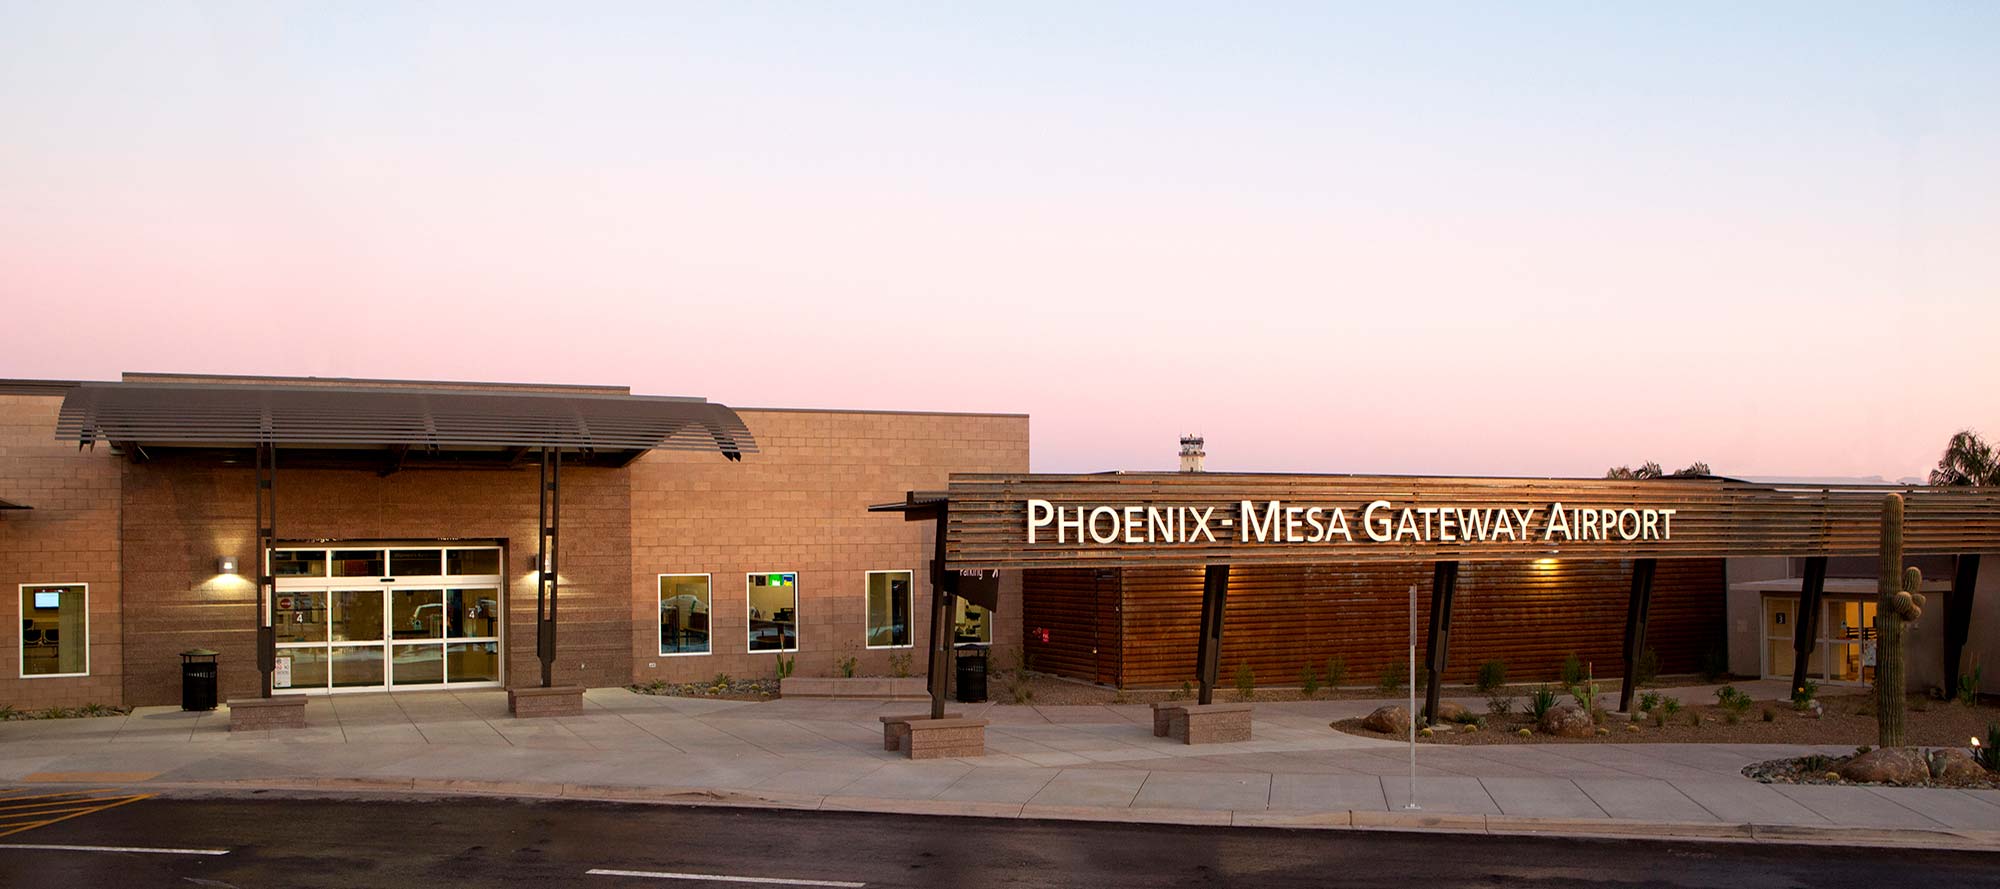 Phoenix-Mesa Gateway Airport Gearing Up for Game-Changing International Trade Program